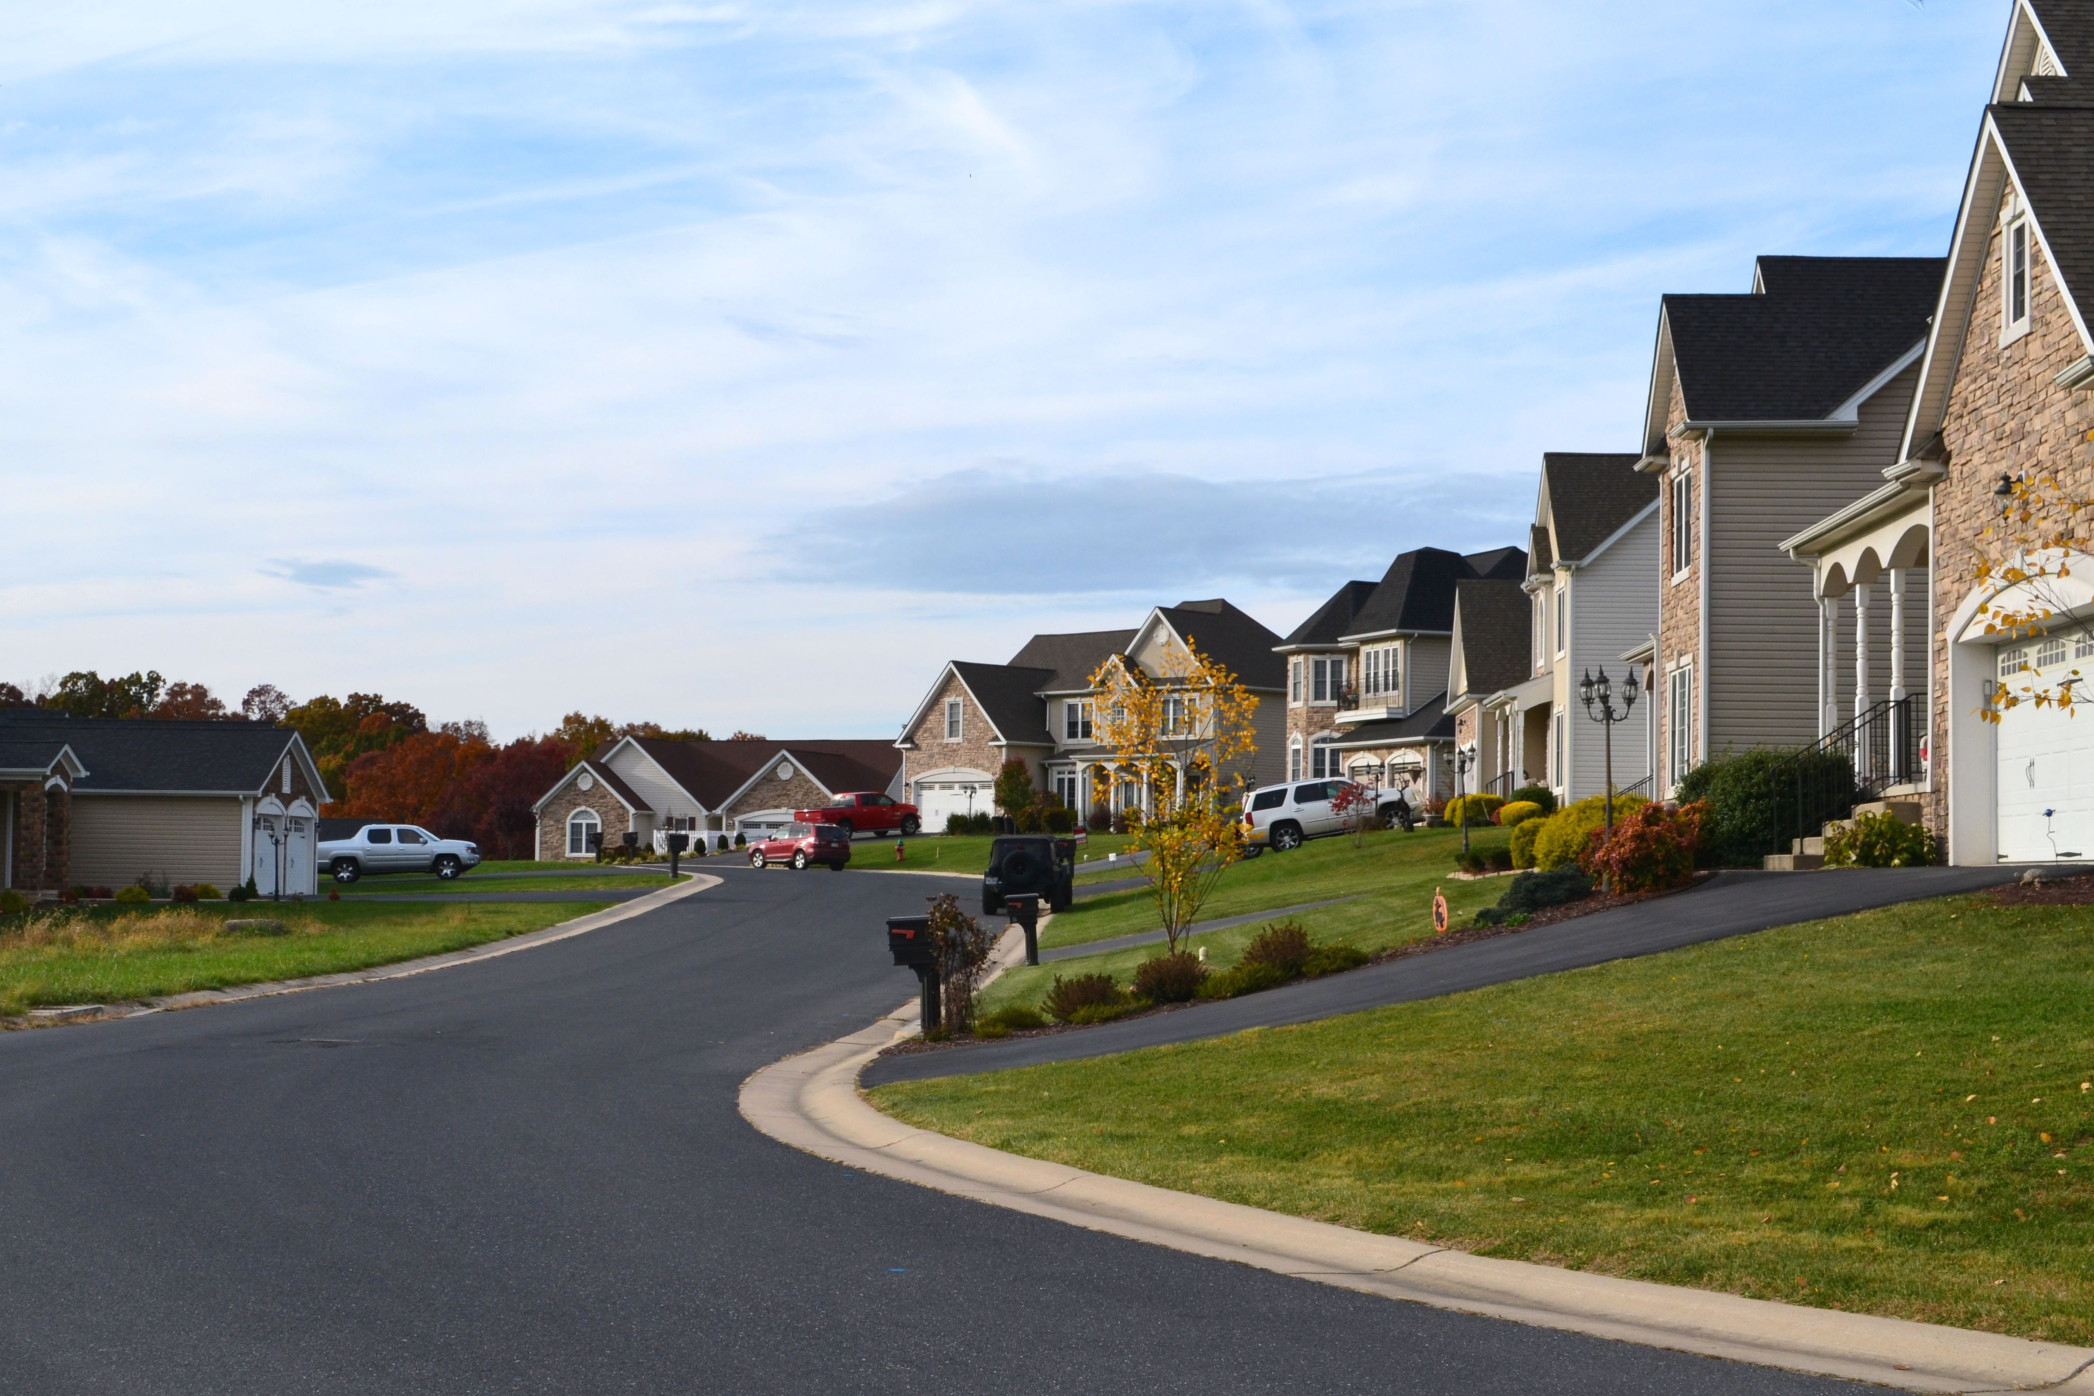 houses in a suburban neighborhood